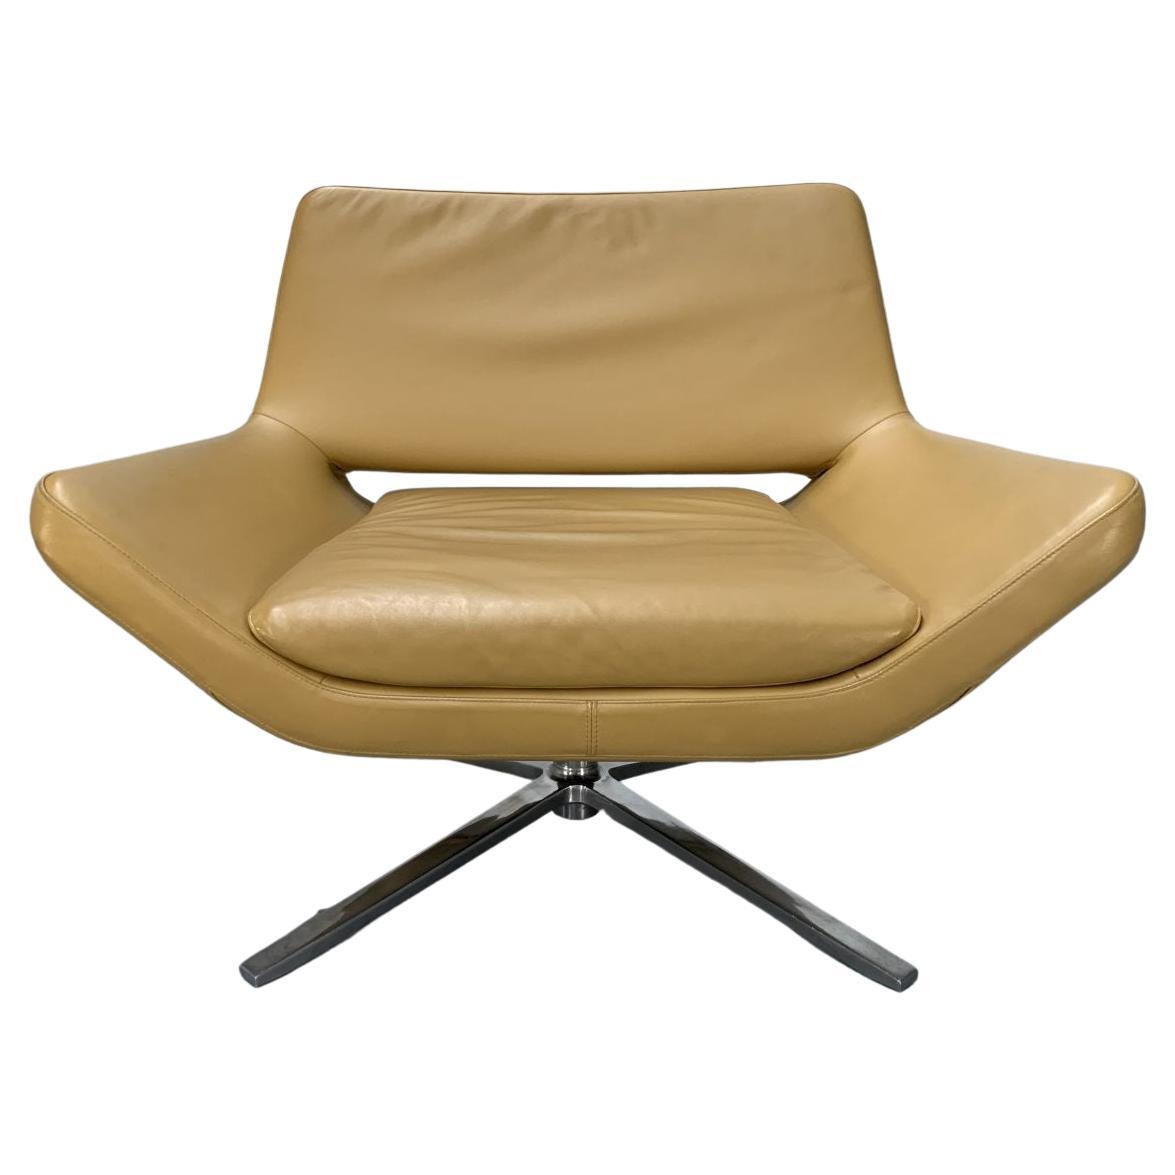 B&B Italia “Metropolitan ME84” Armchair In Tan “Gamma” Leather 4 Available For Sale